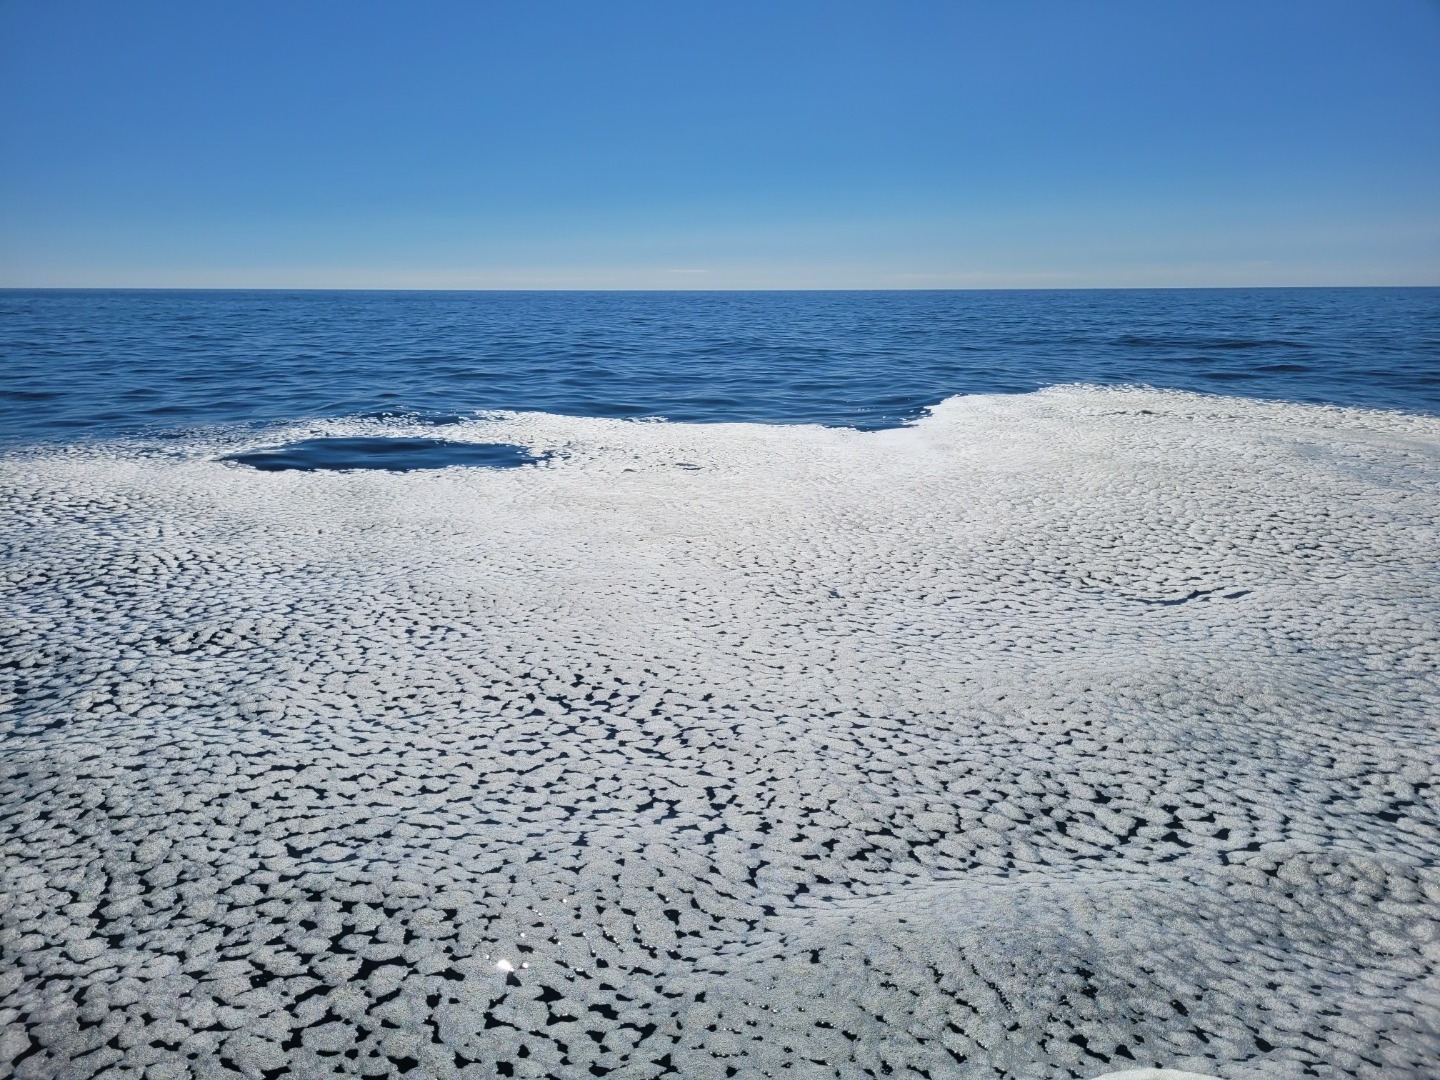 Whale Tracks in the Foam